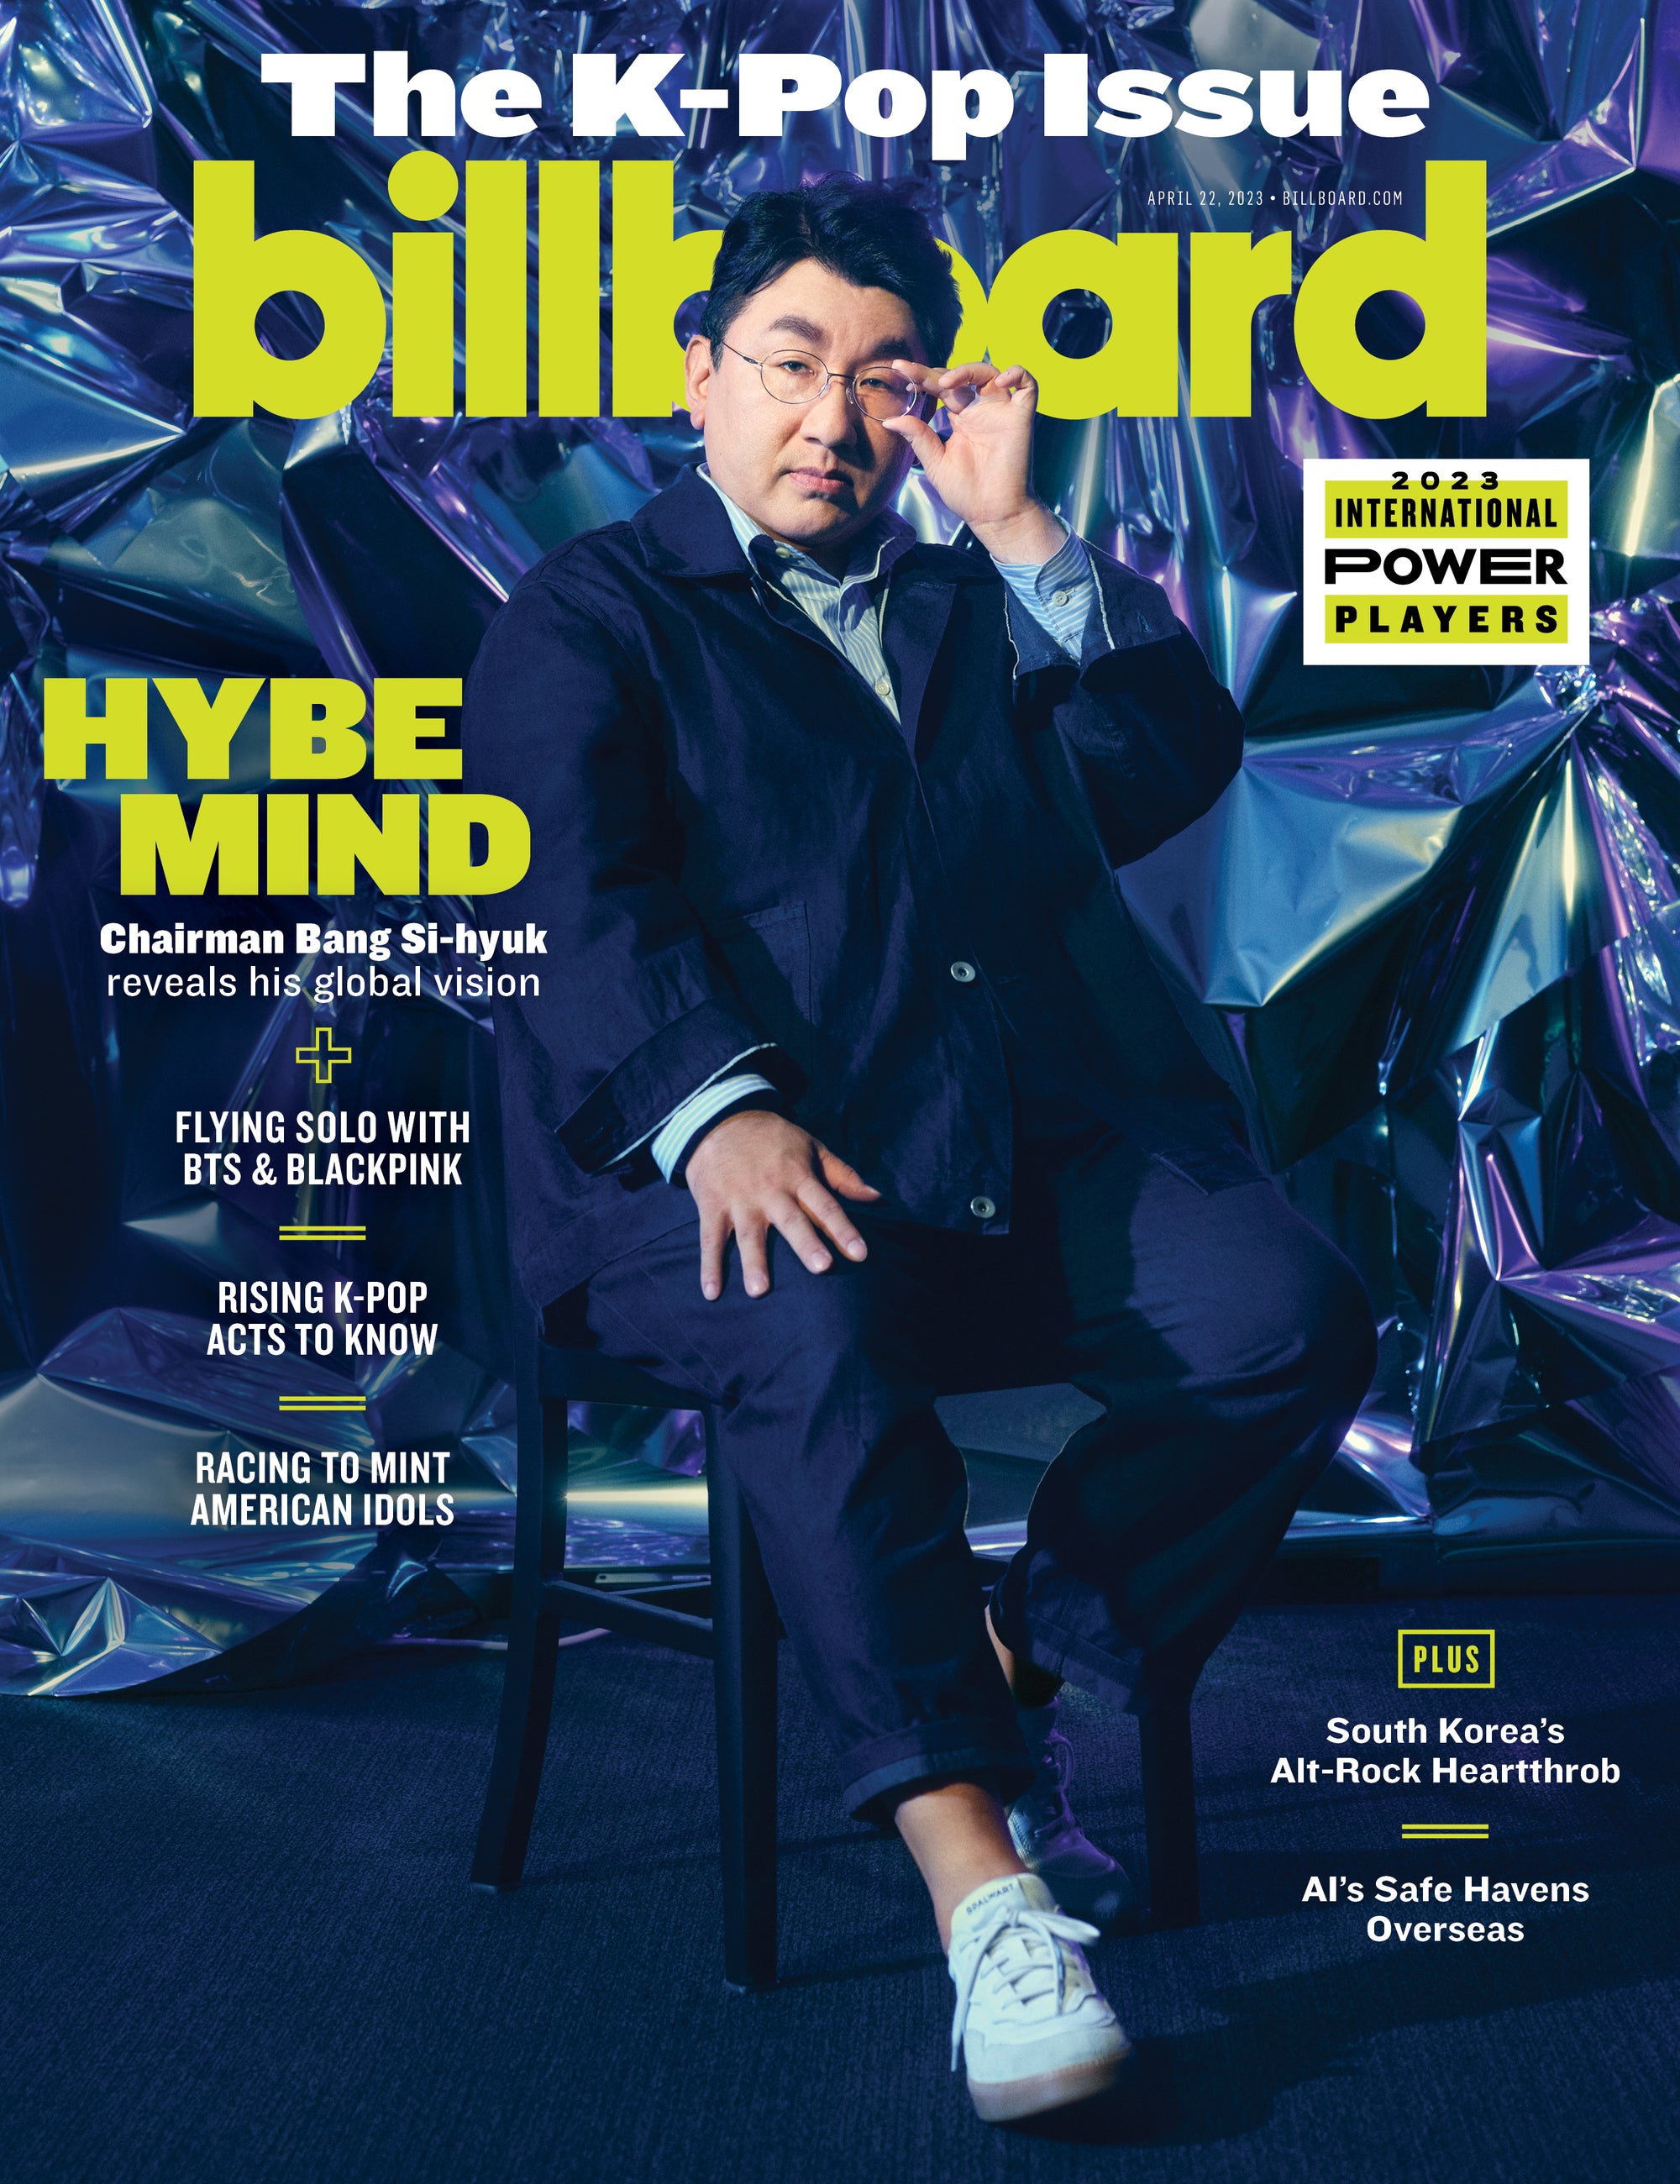 January 16, 2021 - Issue 1 - Billboard Magazine Store